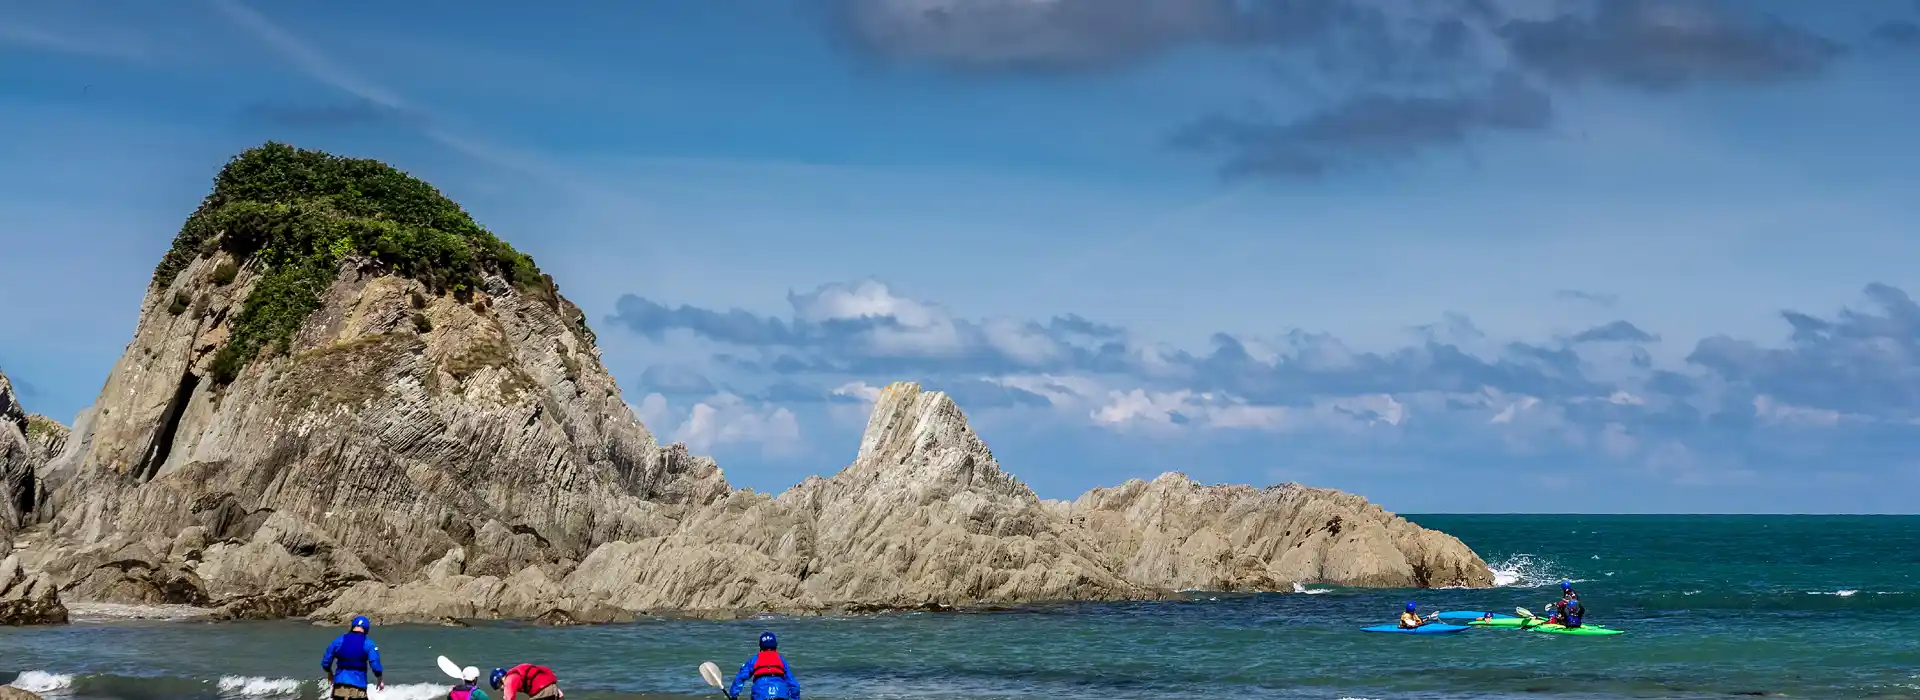 Sea-kayaking in Devon